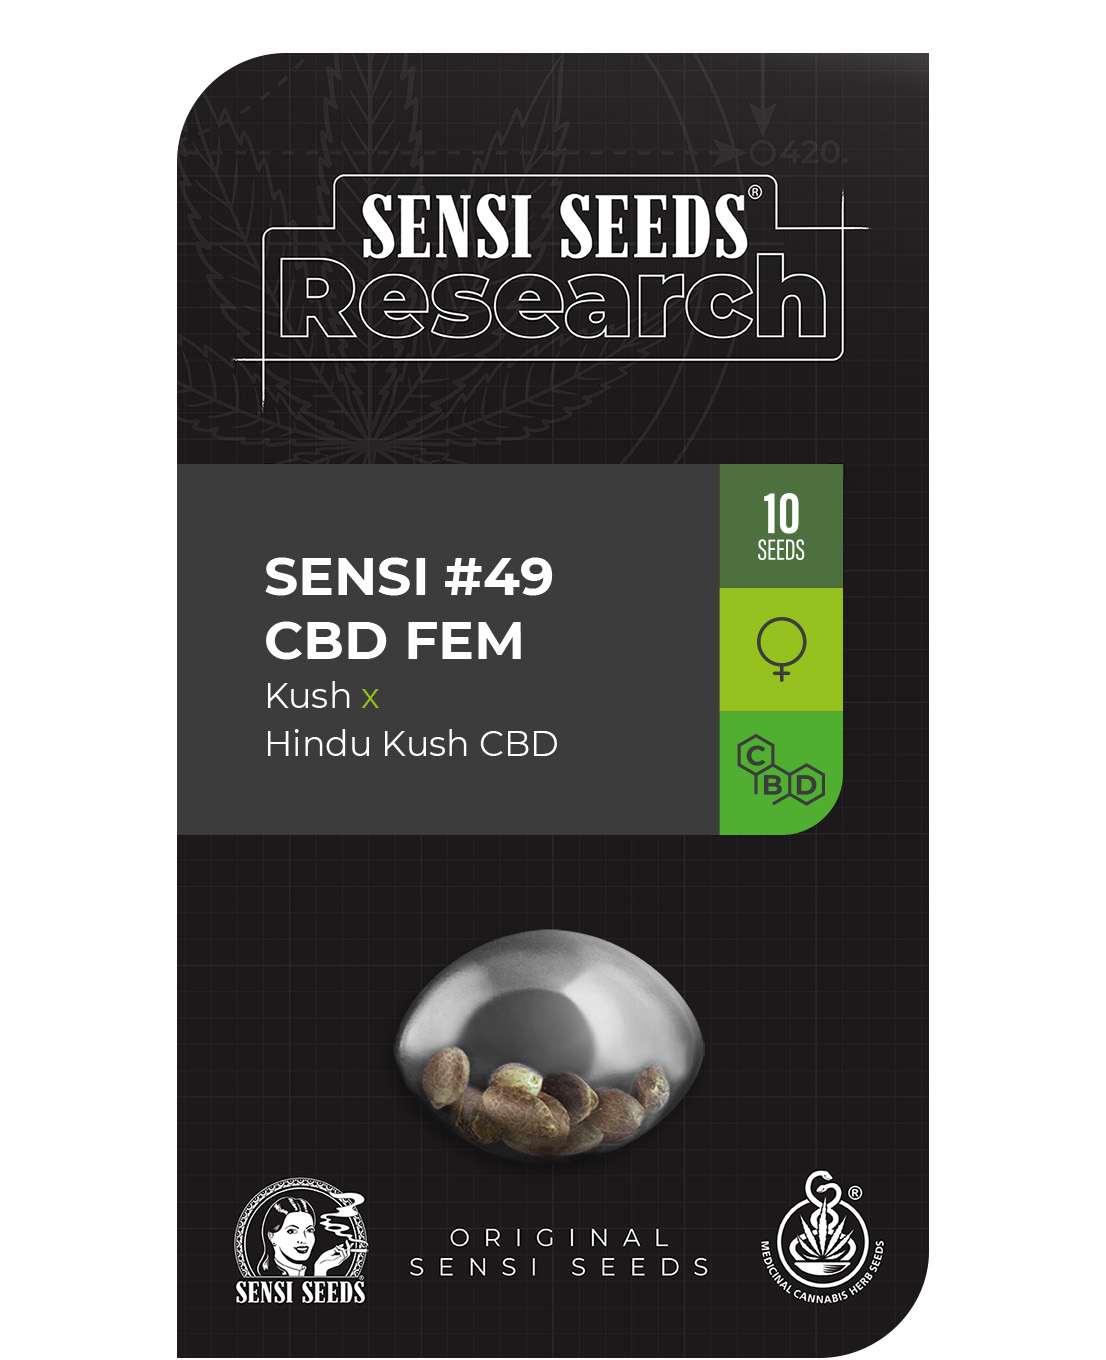 Sensi #49 CBD (von Sensi Seeds) :: Cannabis Sorten Infos